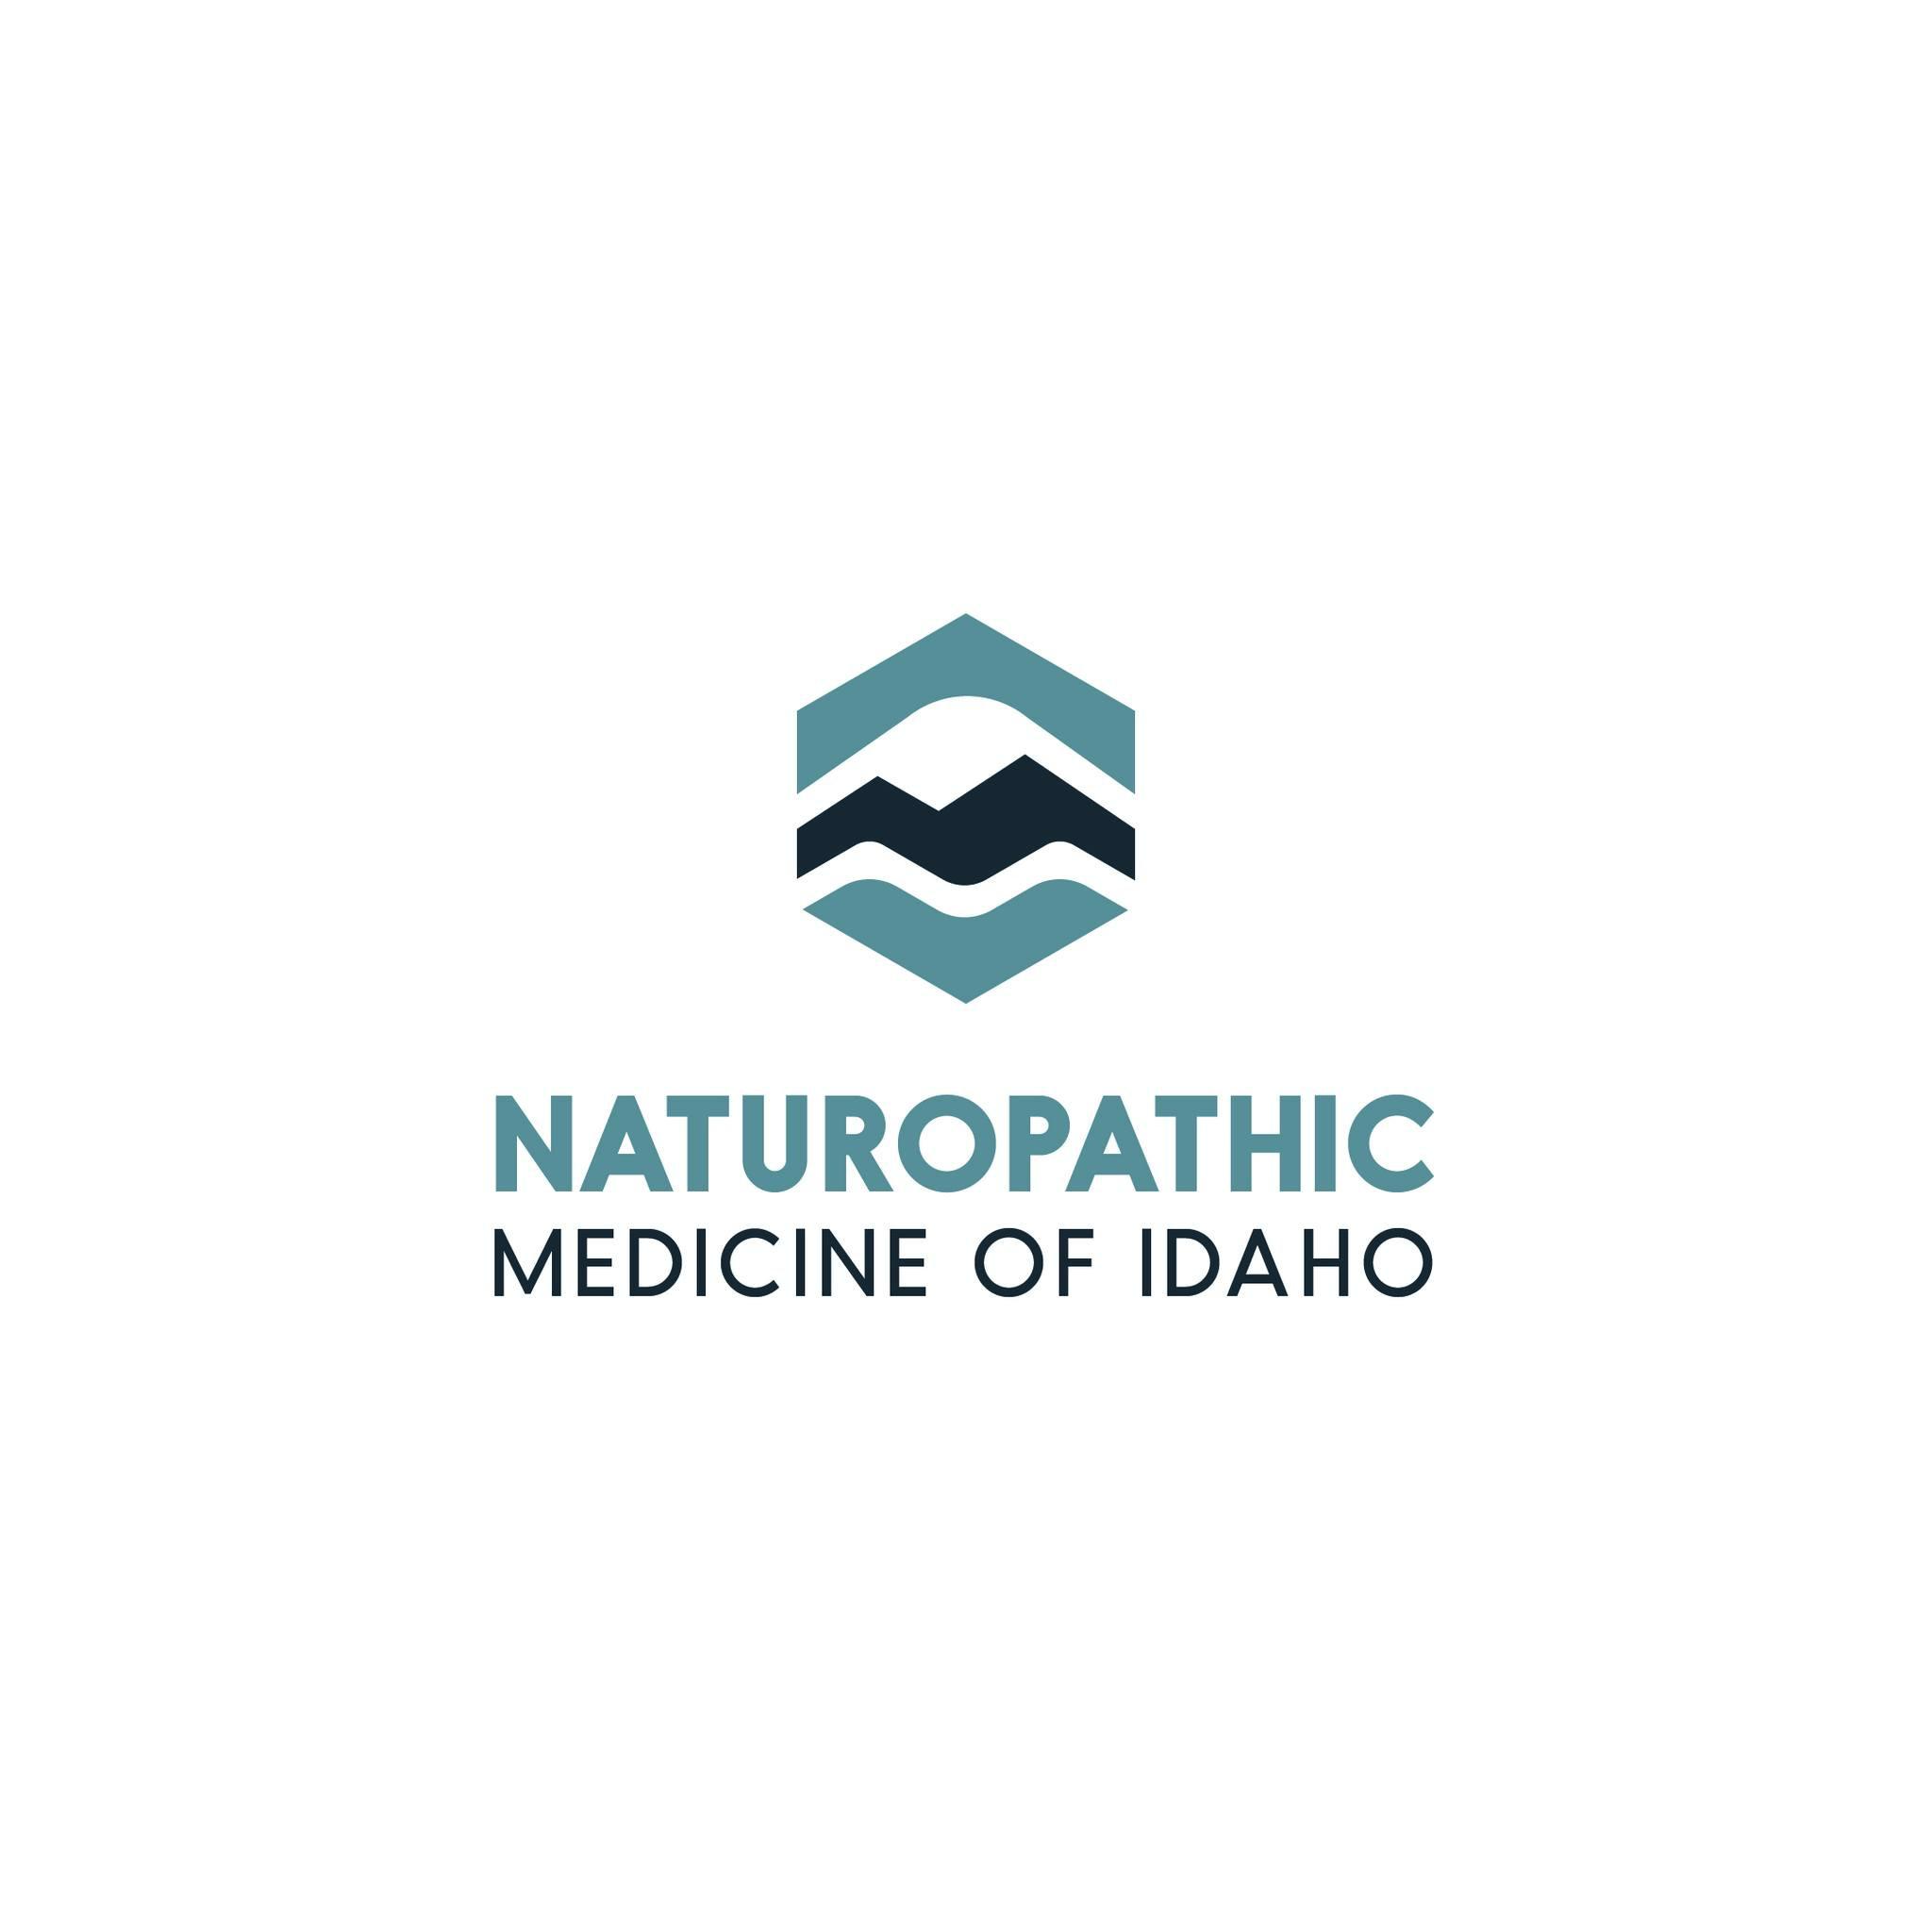 Naturopathic Medicine of Idaho